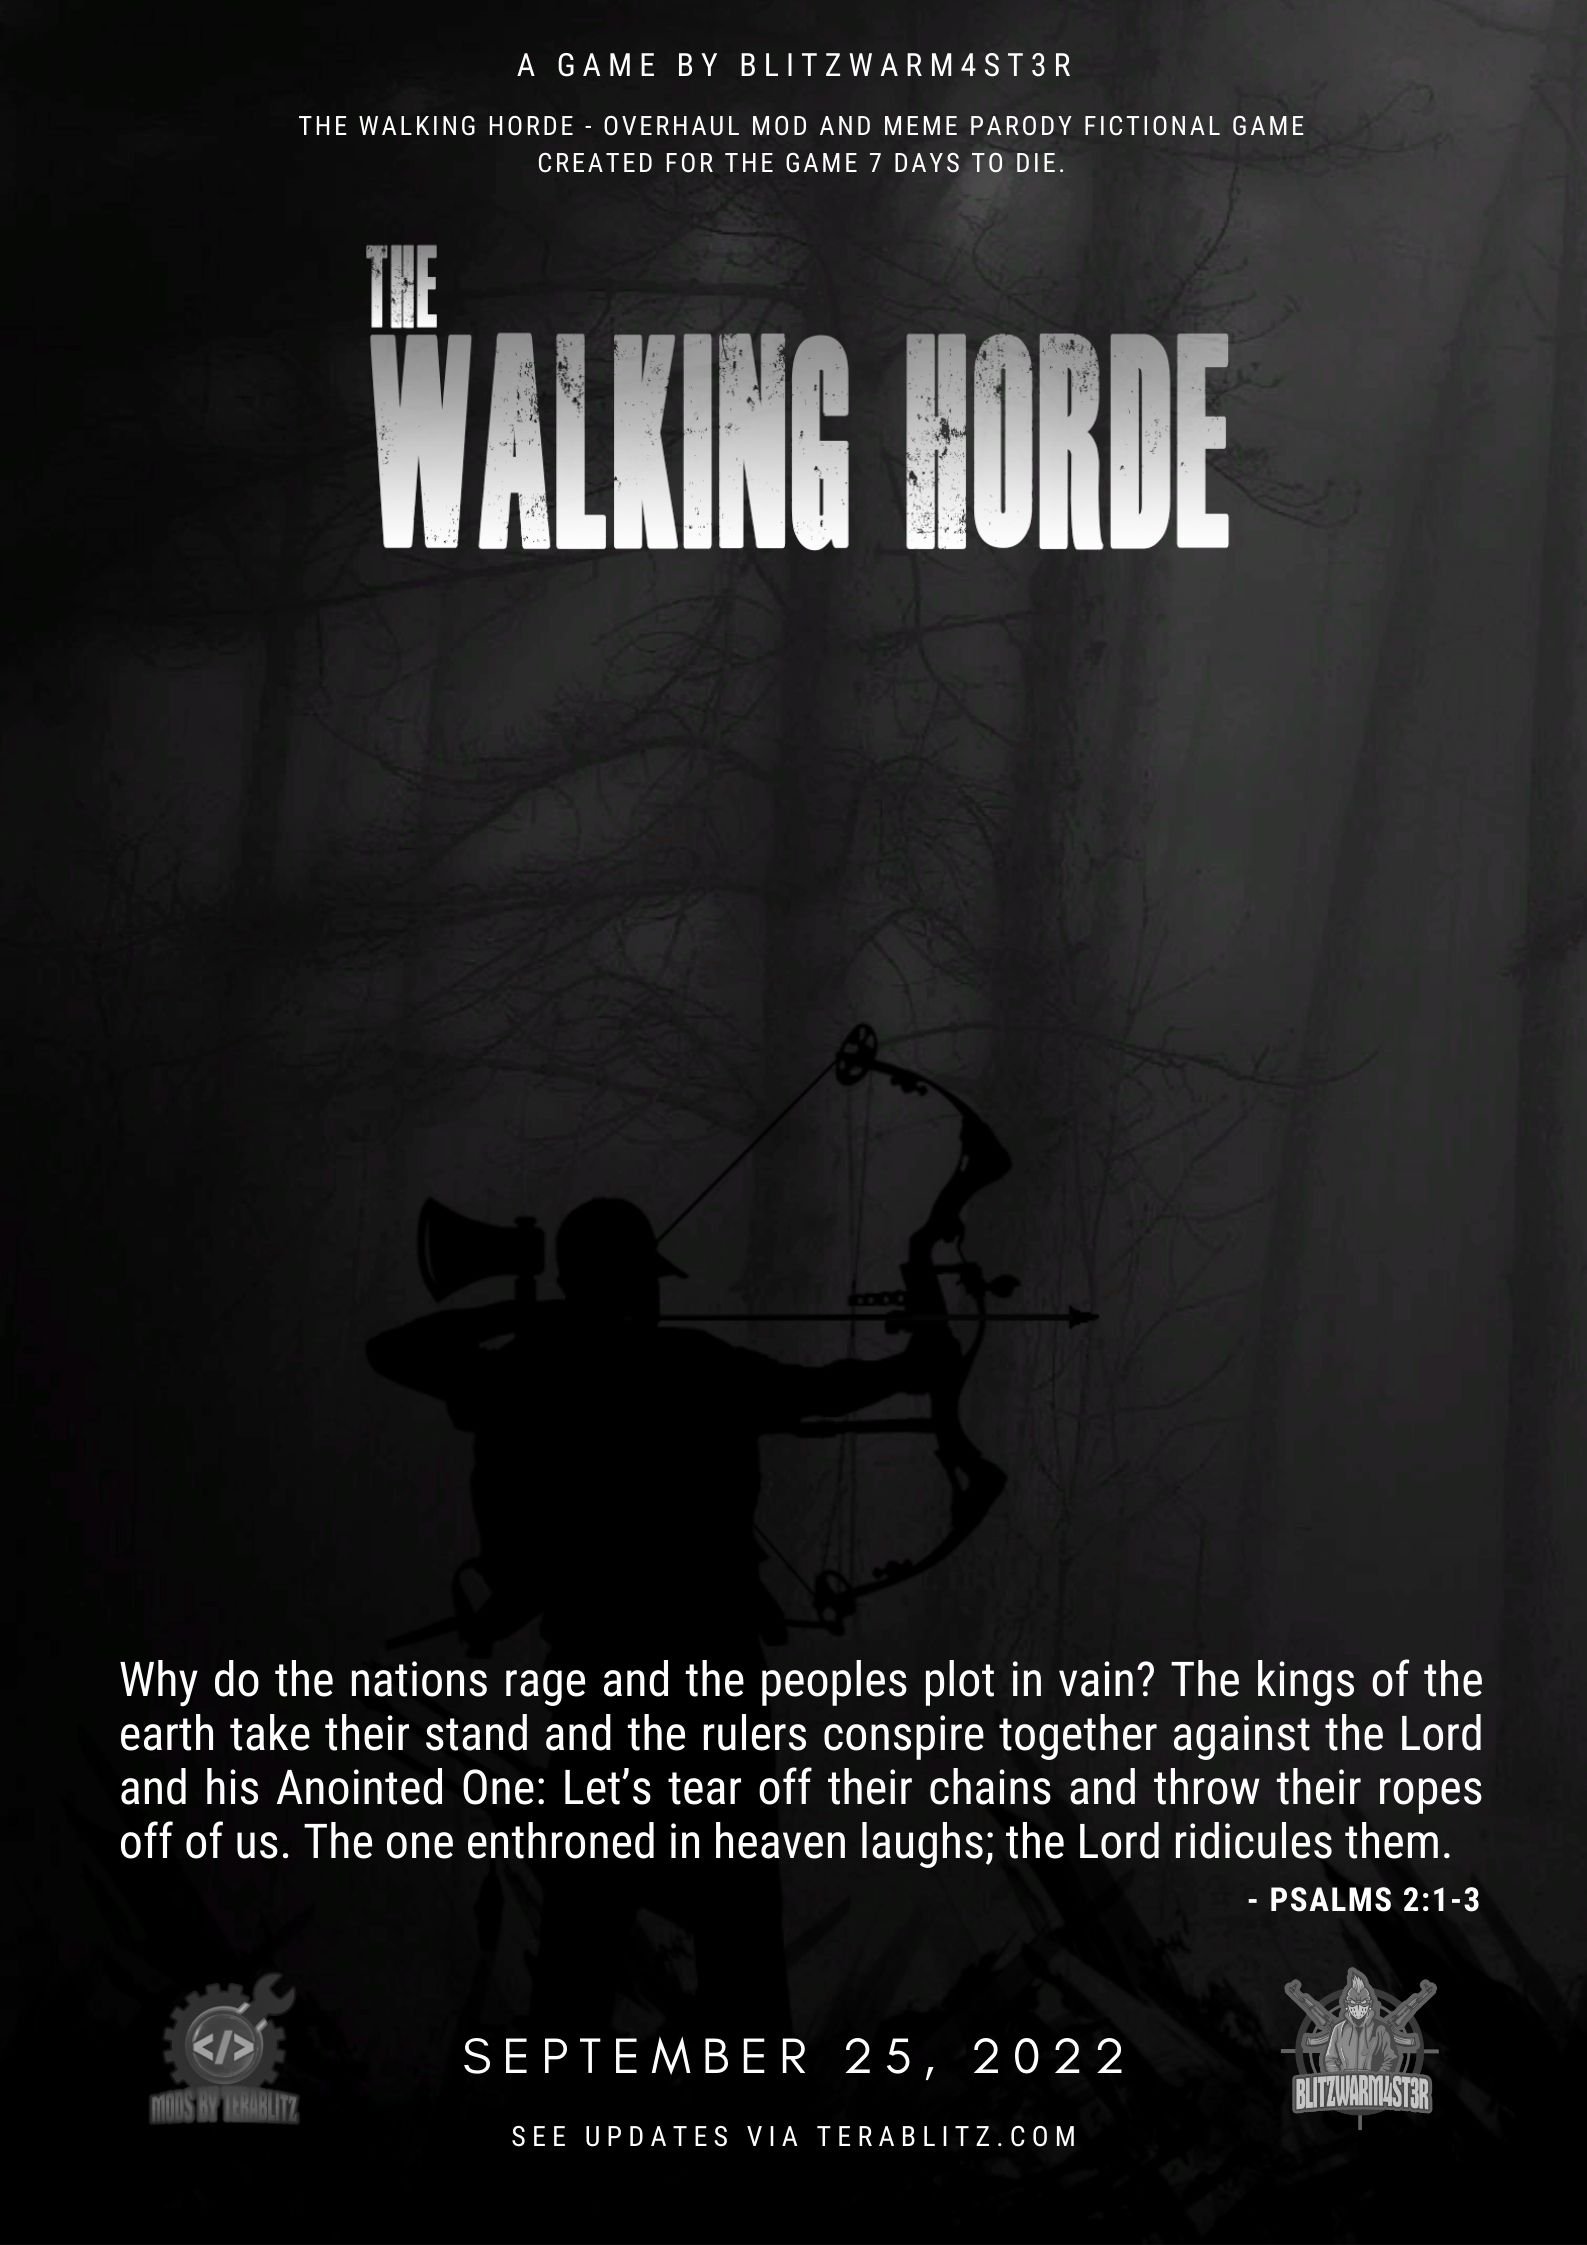 The Walking Horde Game Release